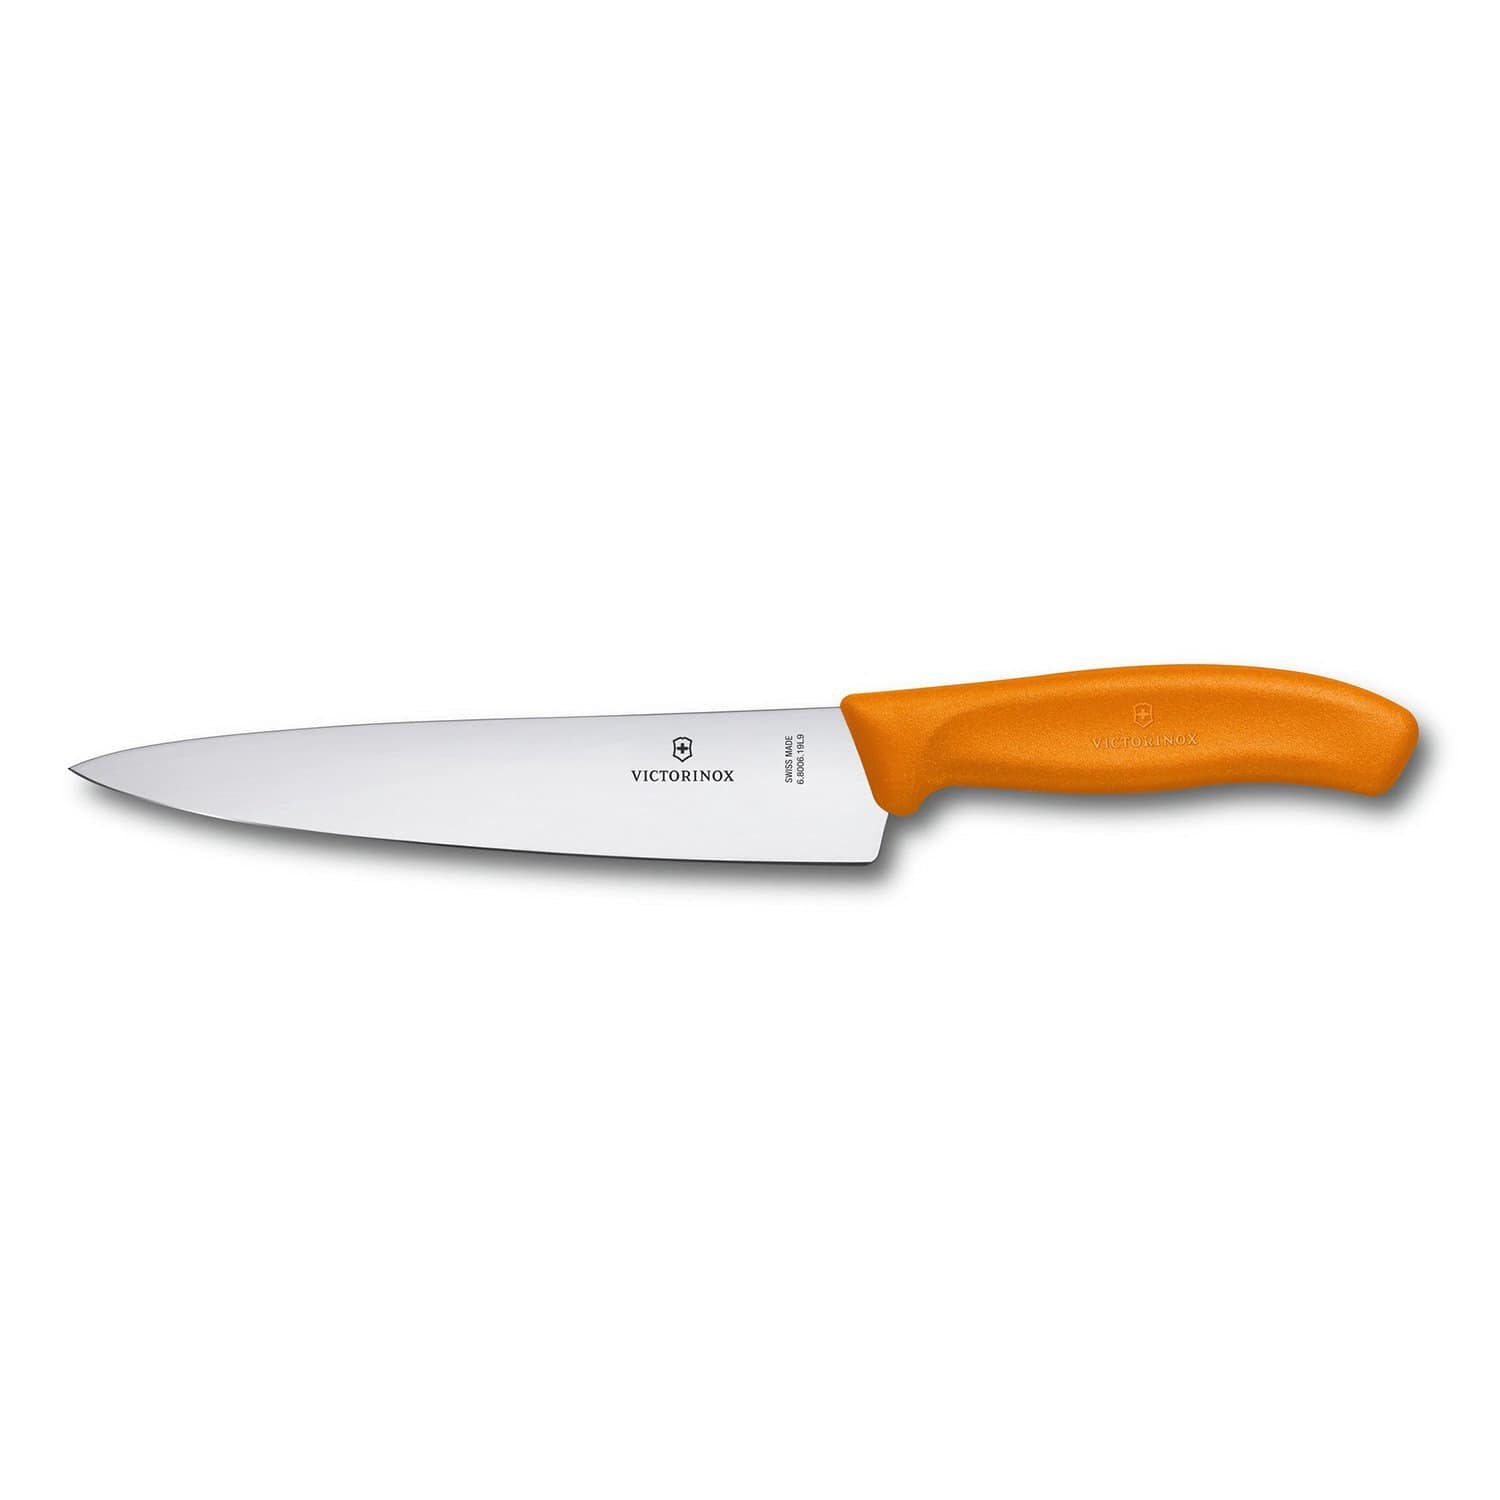 Victorinox السويسرية الكلاسيكية نحت سكين -- أورانج نفطة -- 6.8006.19L9B -- Jashanmal الرئيسية